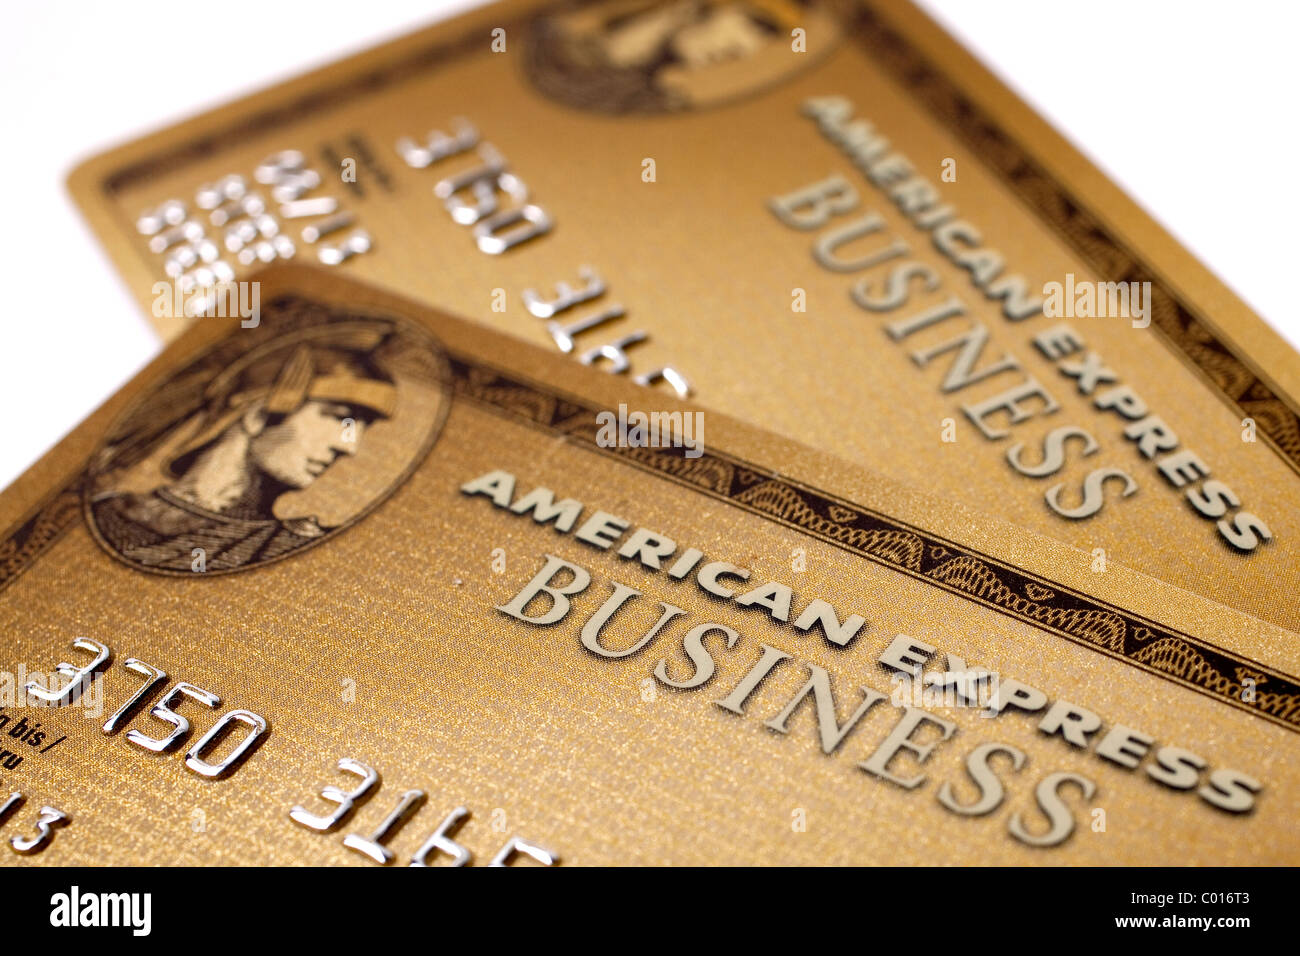 Kreditkarten American Express, Amex, Gold Business Card Stockfoto